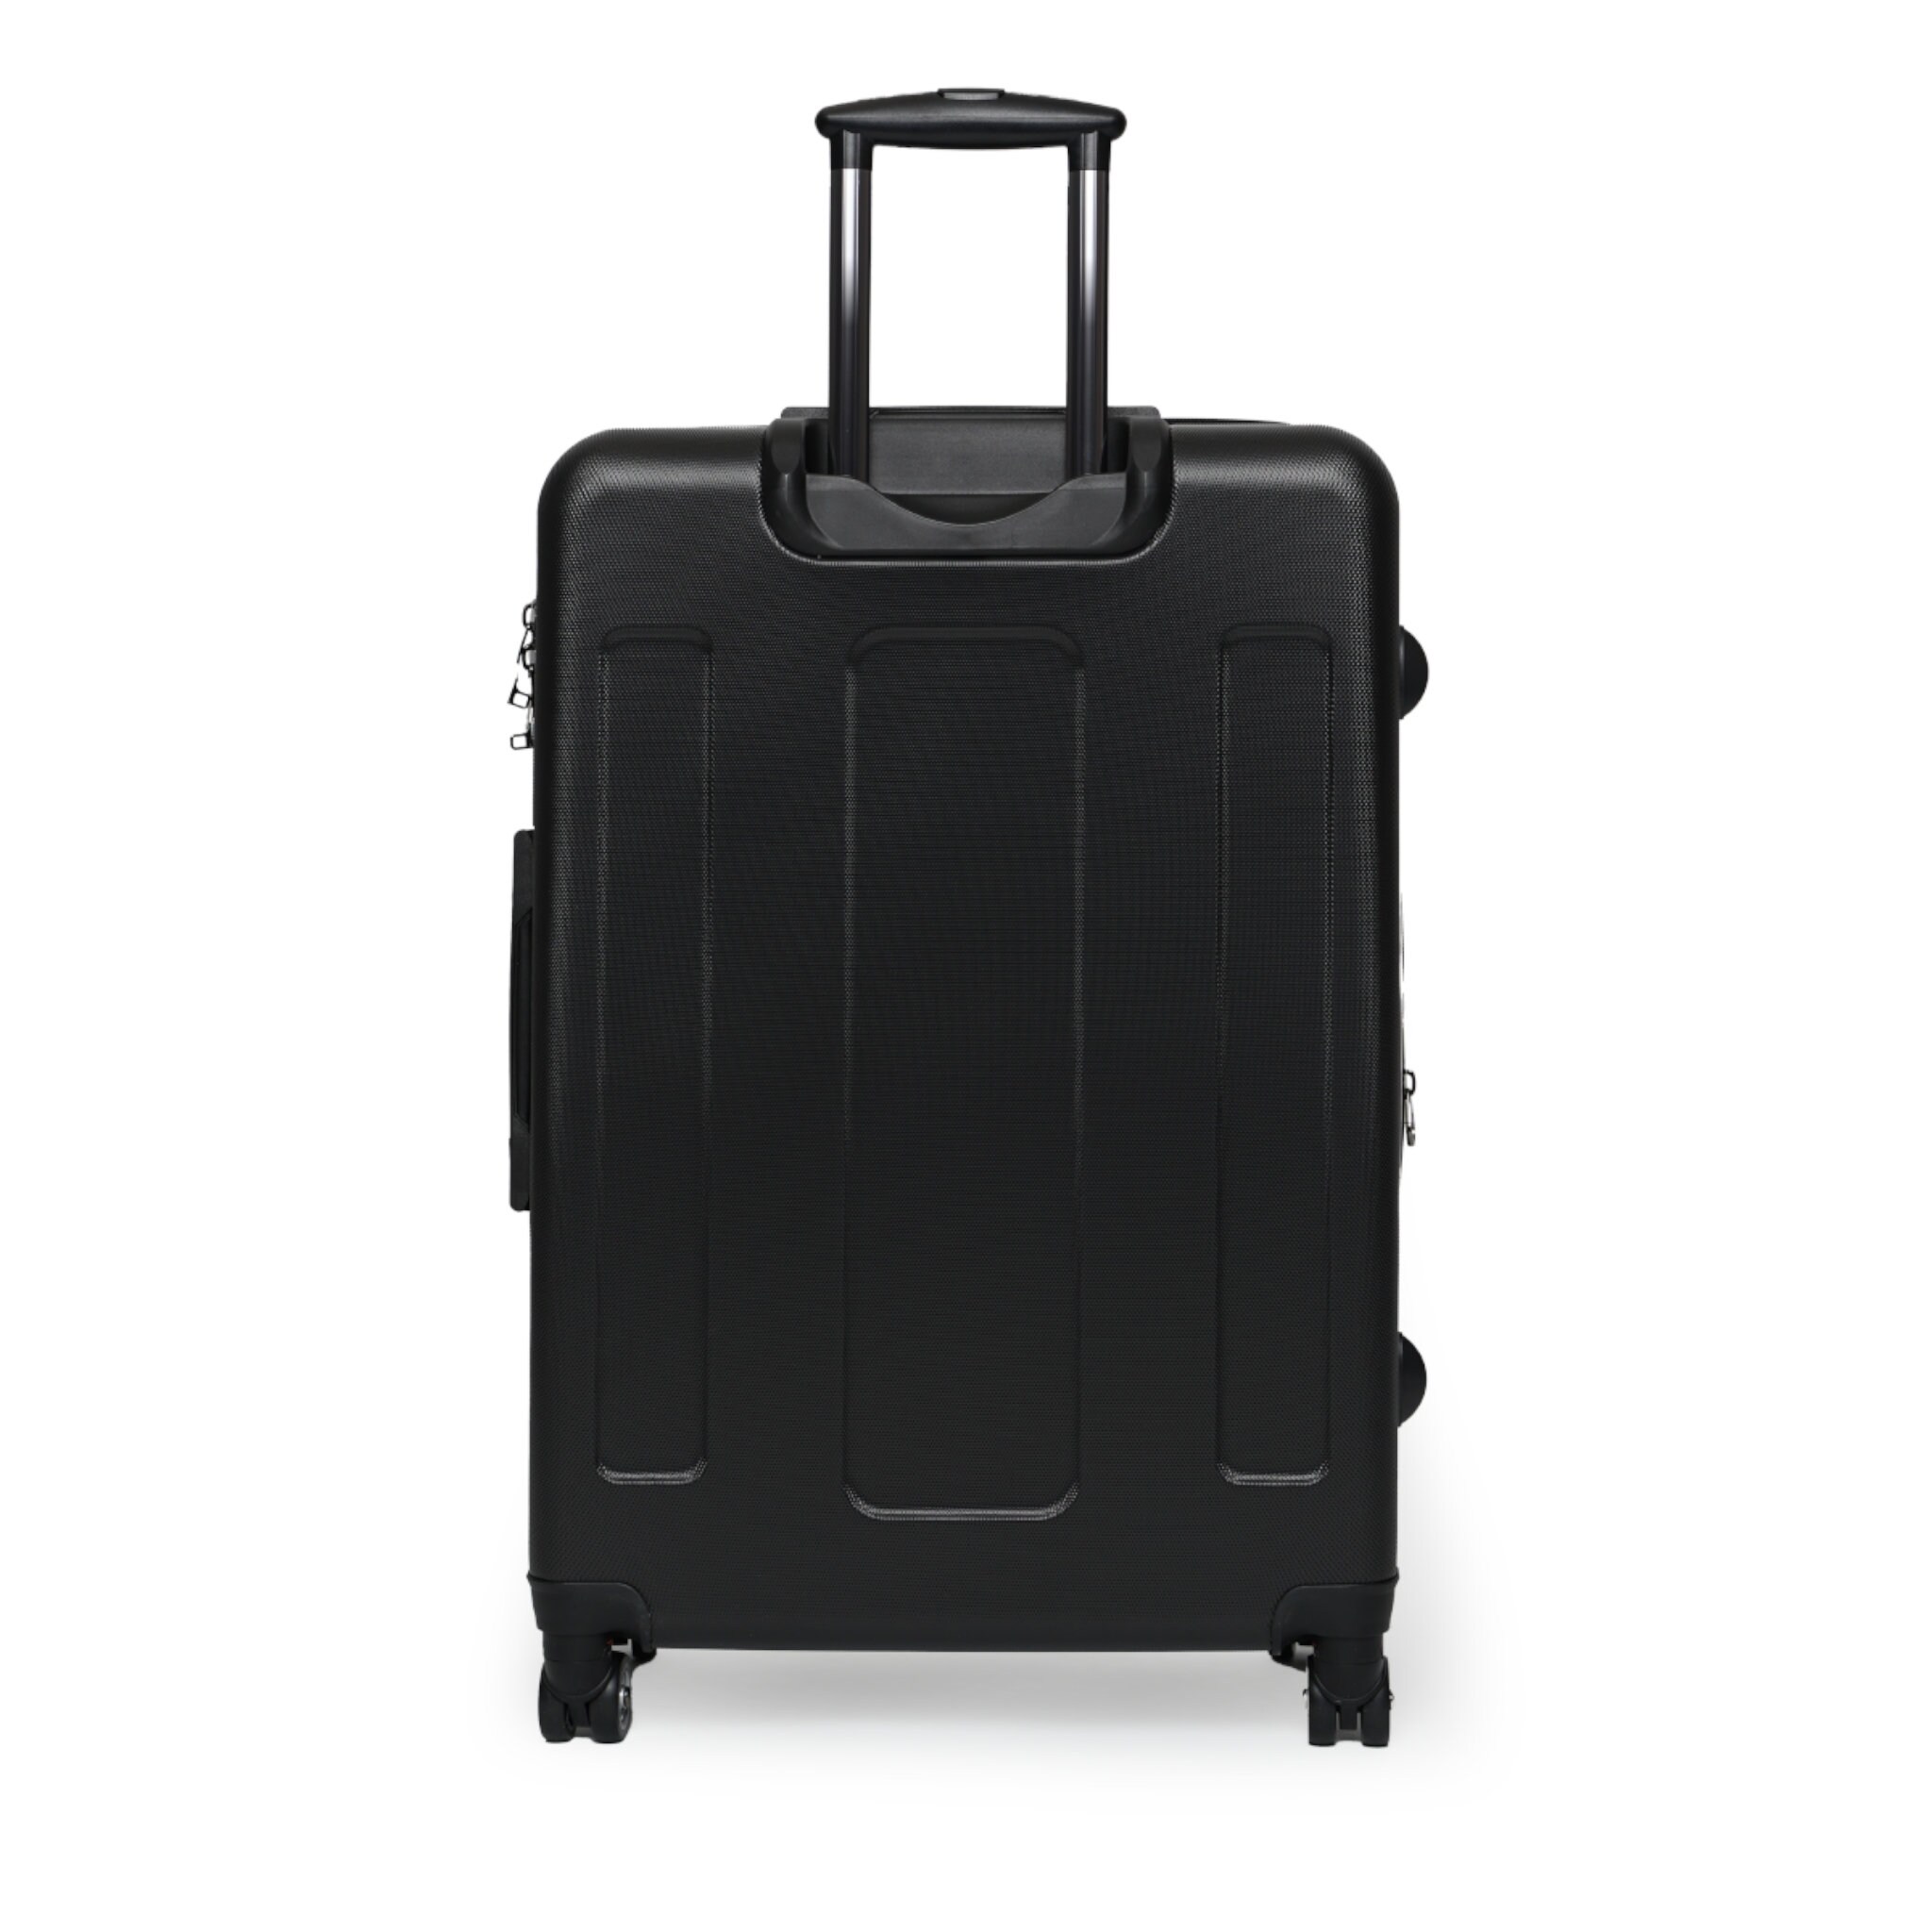 Travel Suitcase, Black Cat & Coffee Design, 360 Swivel Wheels, Adjustable Telescopic Handle, Premium Polycarbonate Shell